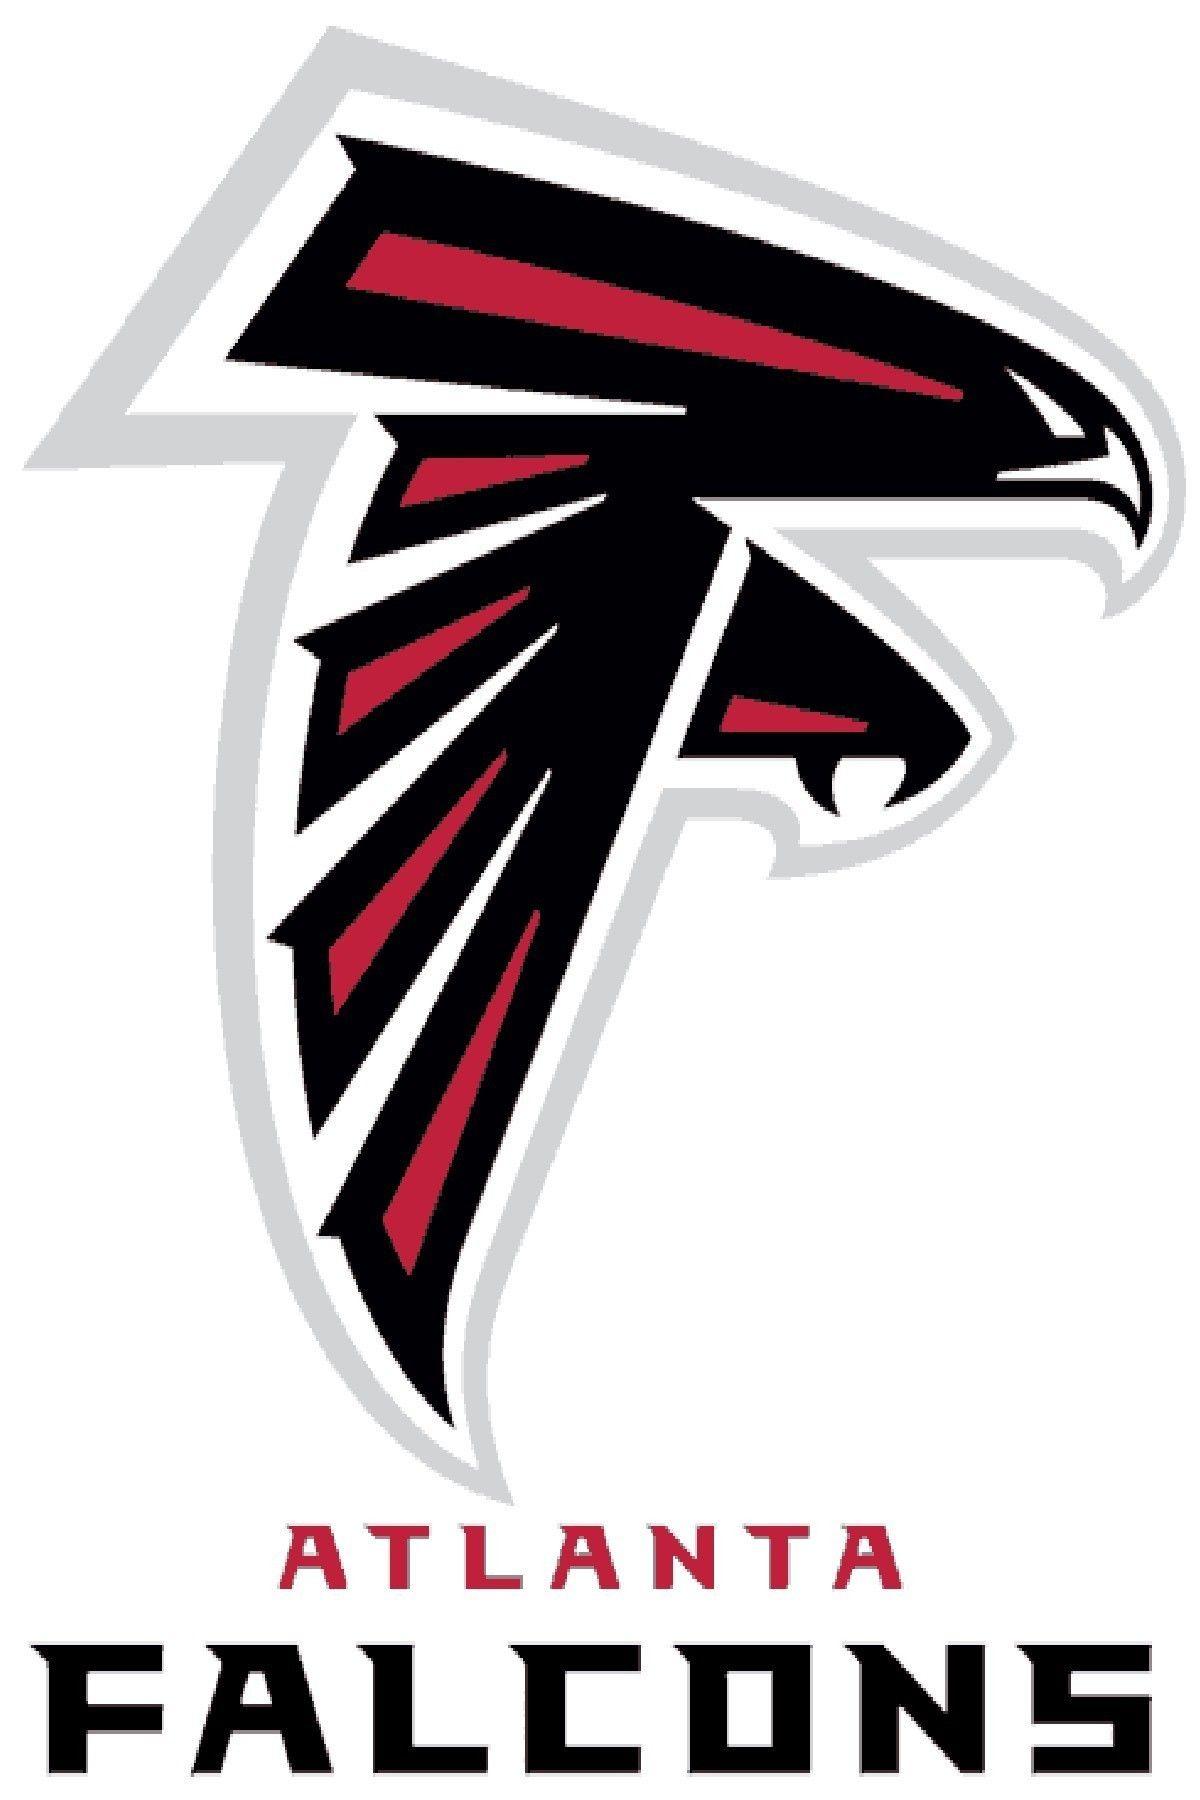 Falcon Team Logo - Atlanta Falcons image Logo HD wallpaper and background photo